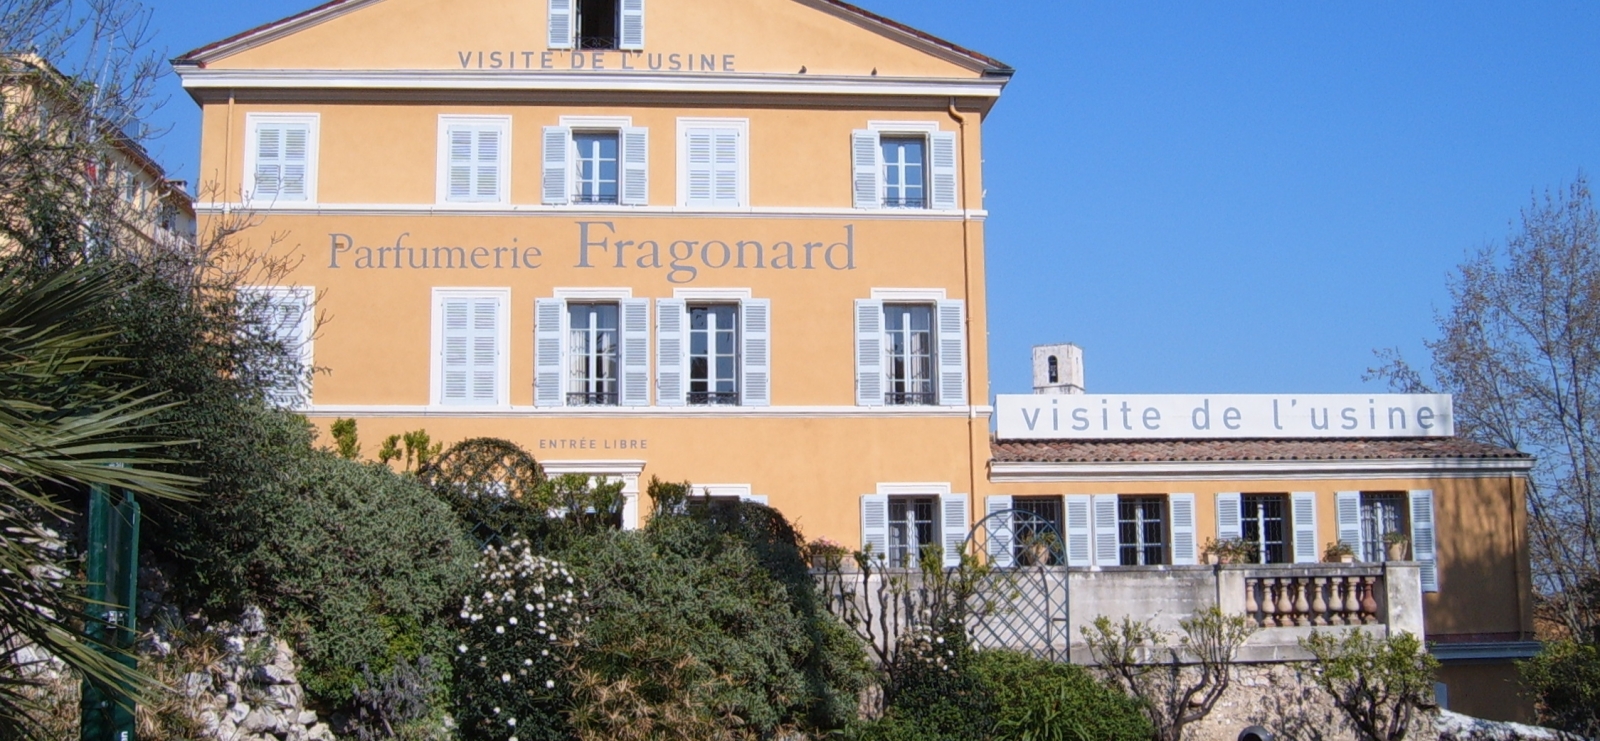 Fragonard Perfumery - Historic perfume factory